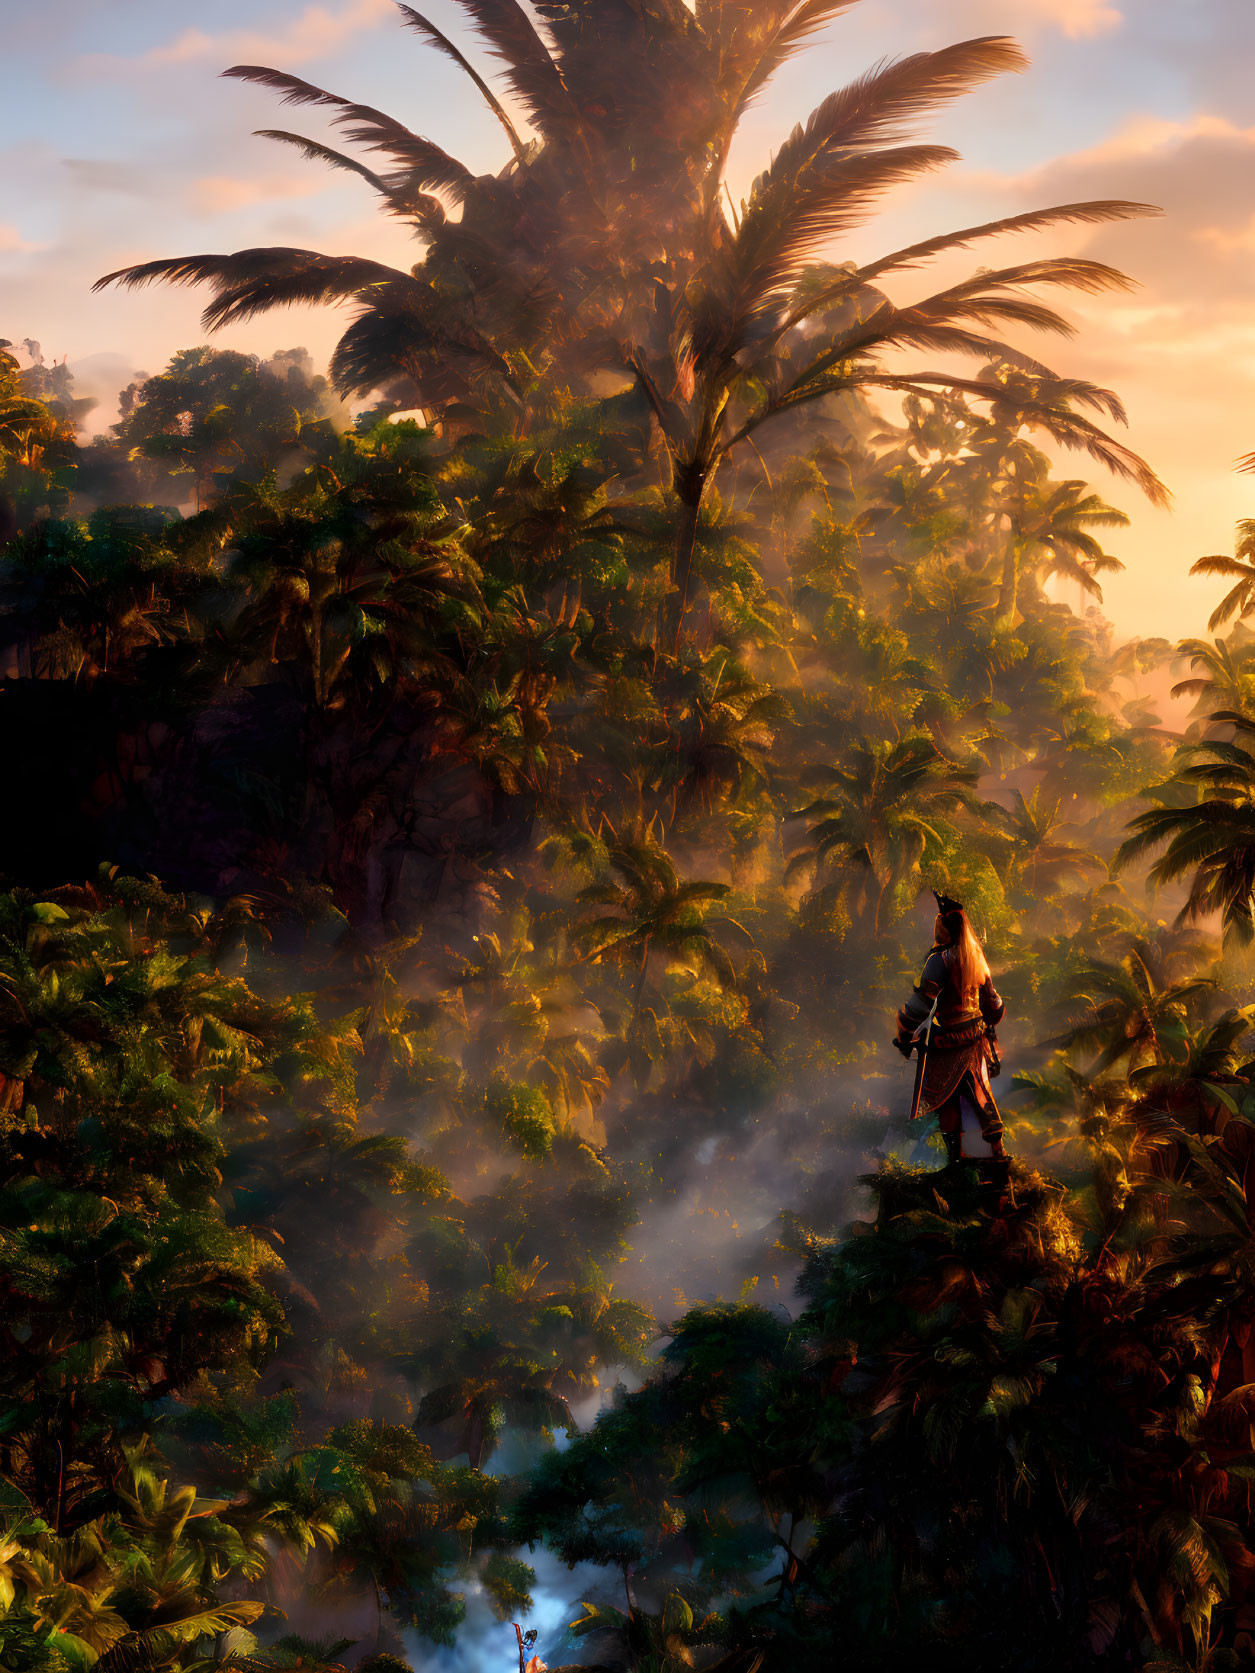 Figure in lush jungle at sunrise overlooking misty landscape